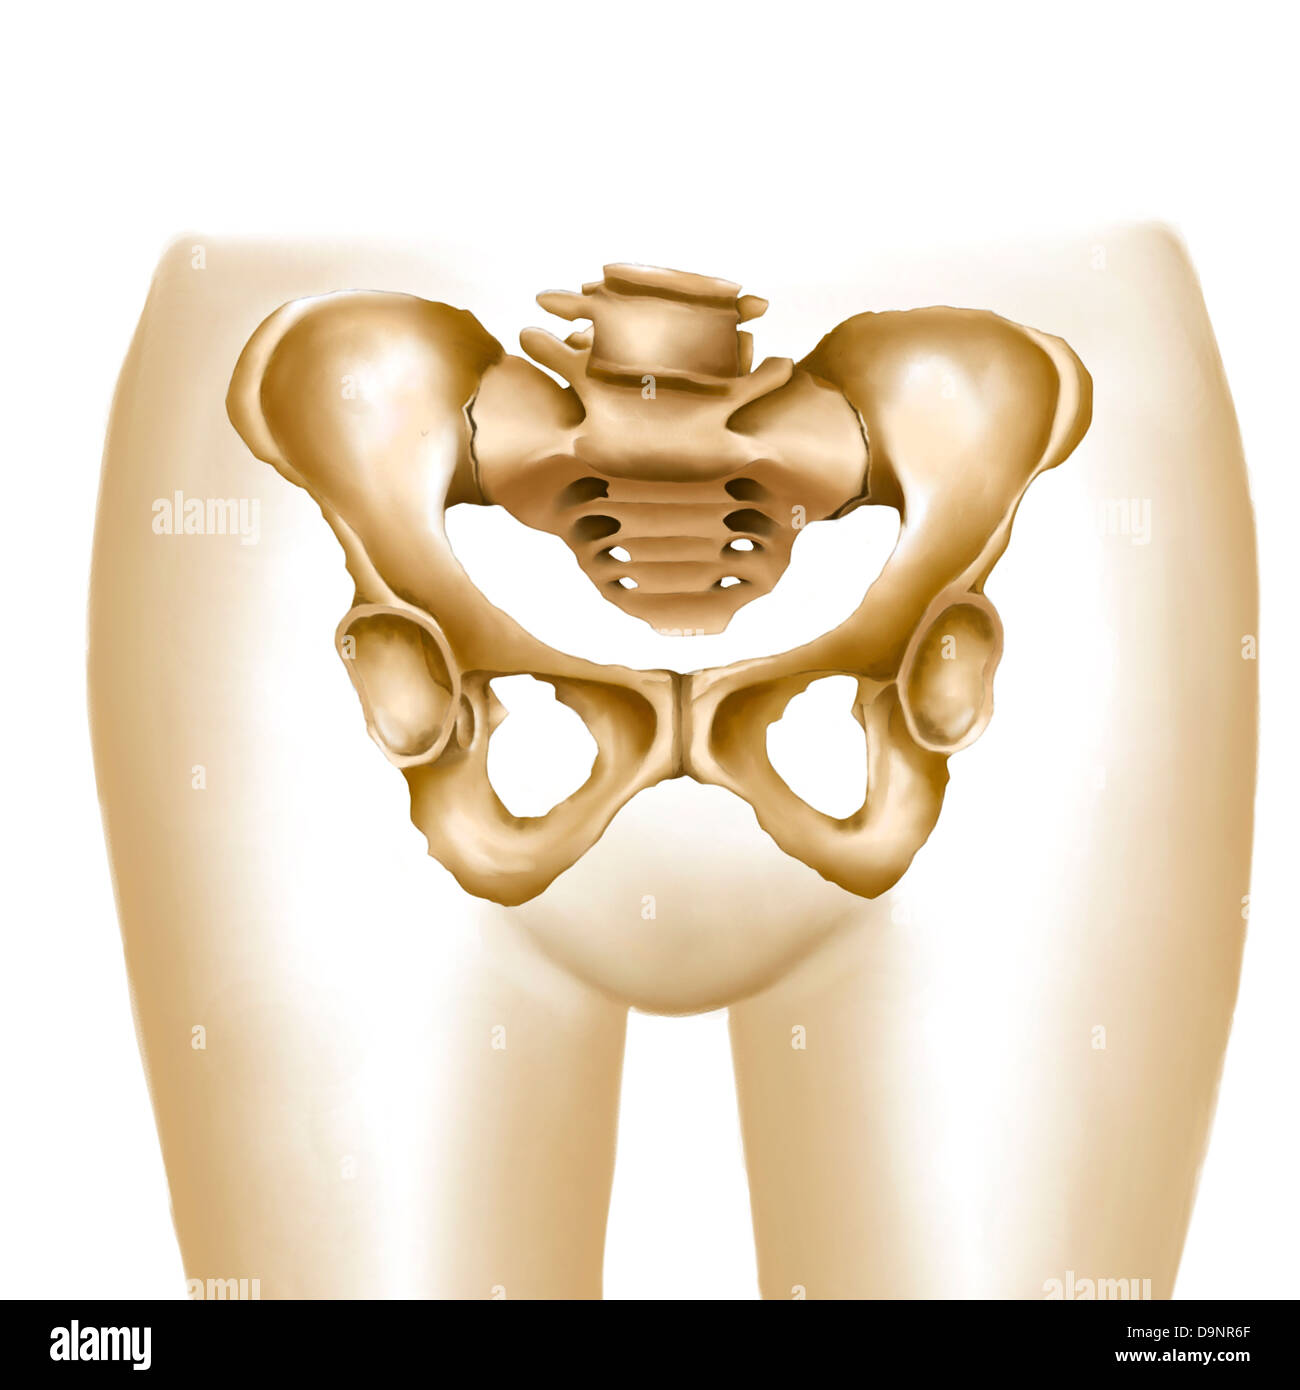 Anatomy of female hips and pelvic bones. Stock Photo